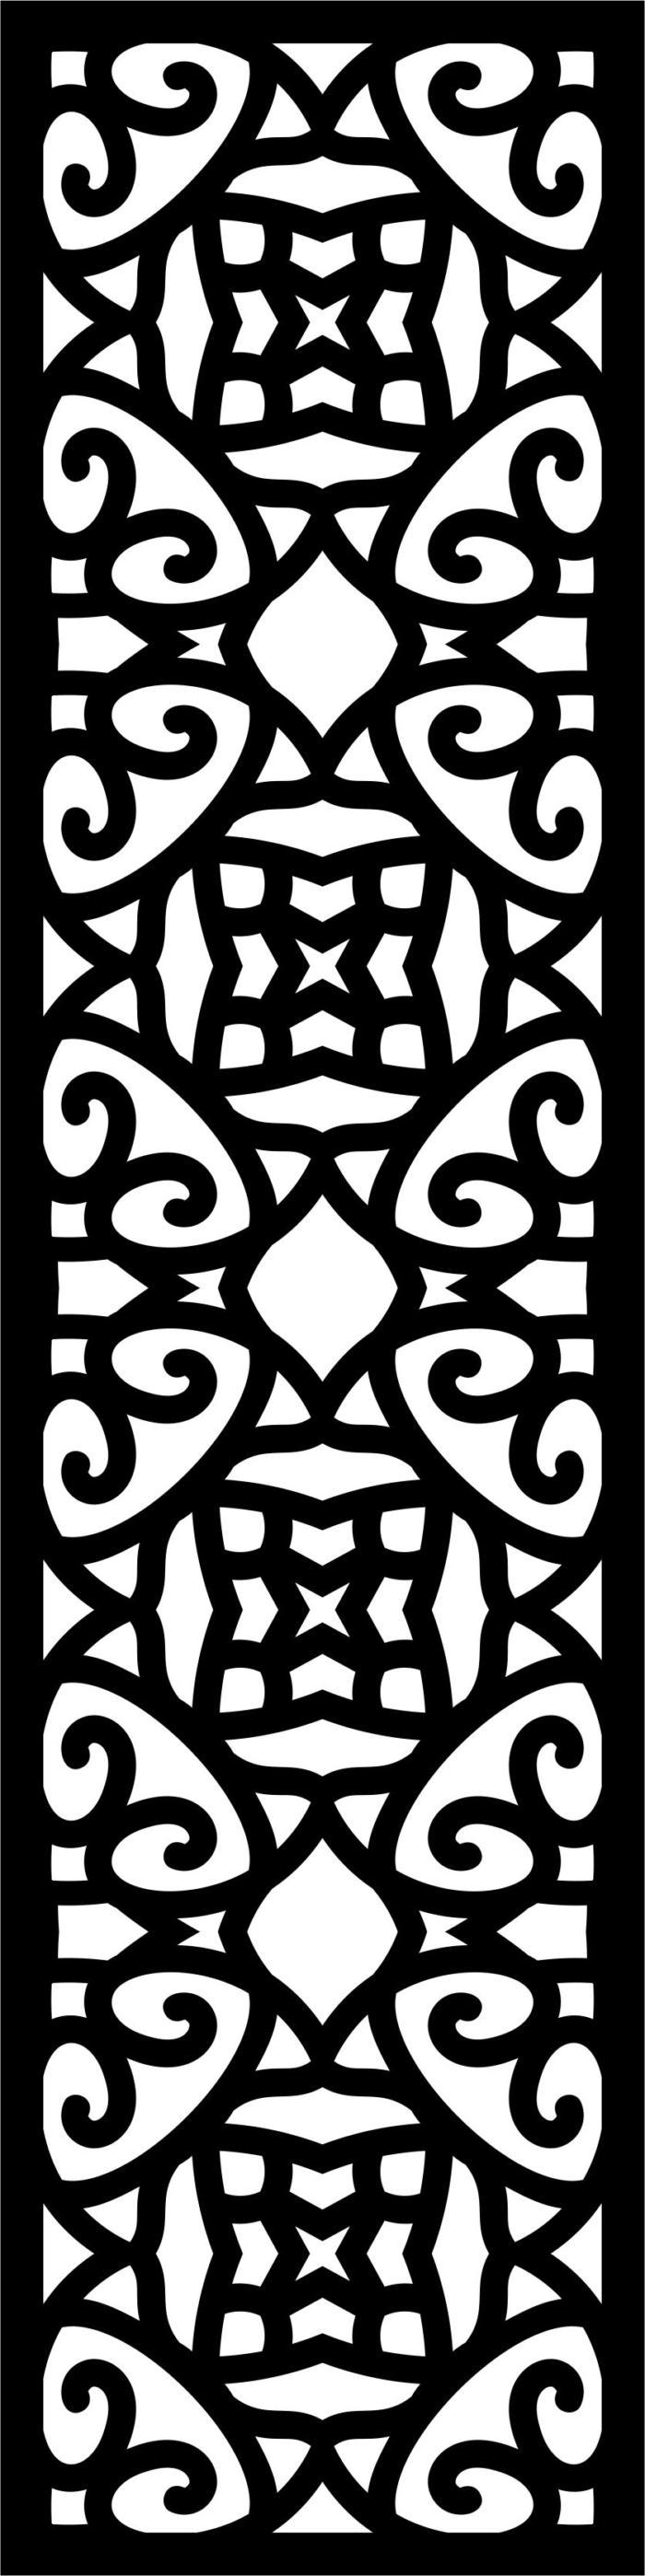 Panel Room Divider Seamless Floral Lattice Stencil Pattern Free CDR Vectors Art